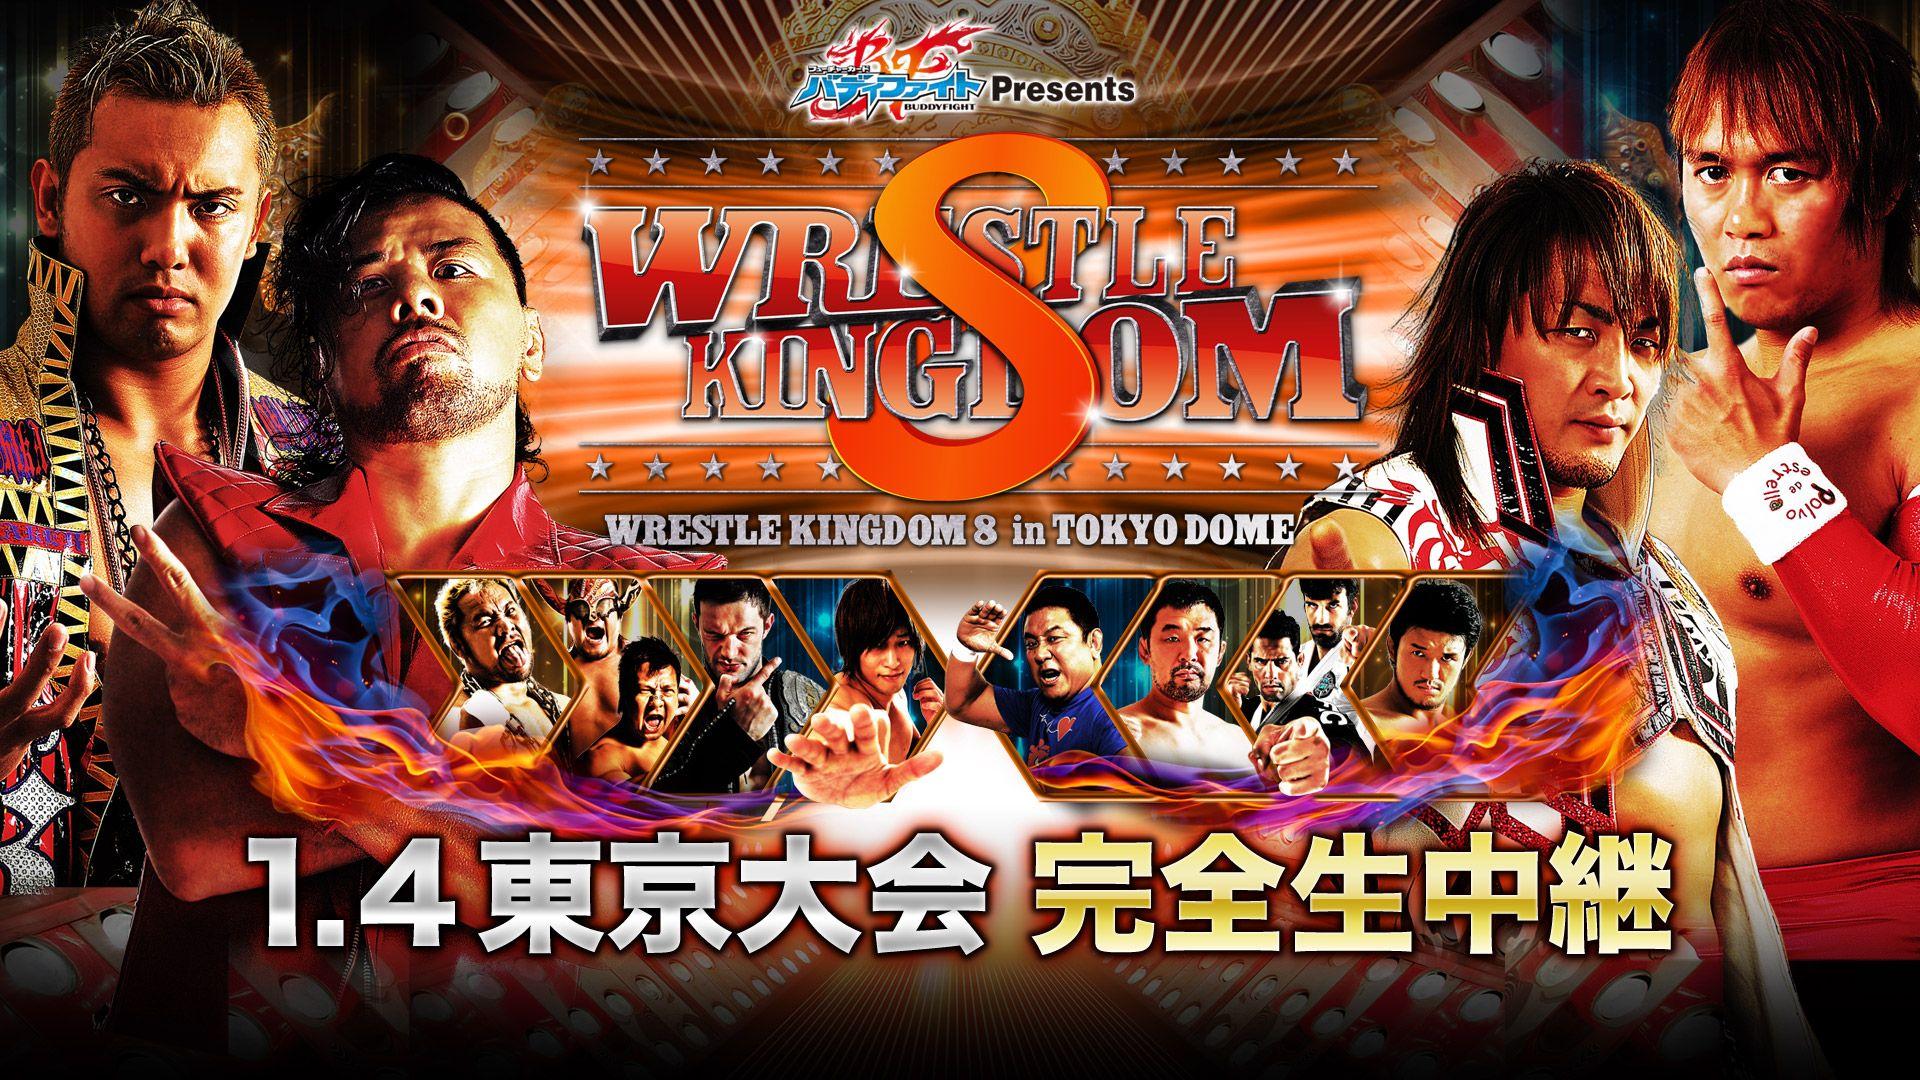 NJPW Wrestle Kingdom 8 Wallpaper to prepare for next weekend